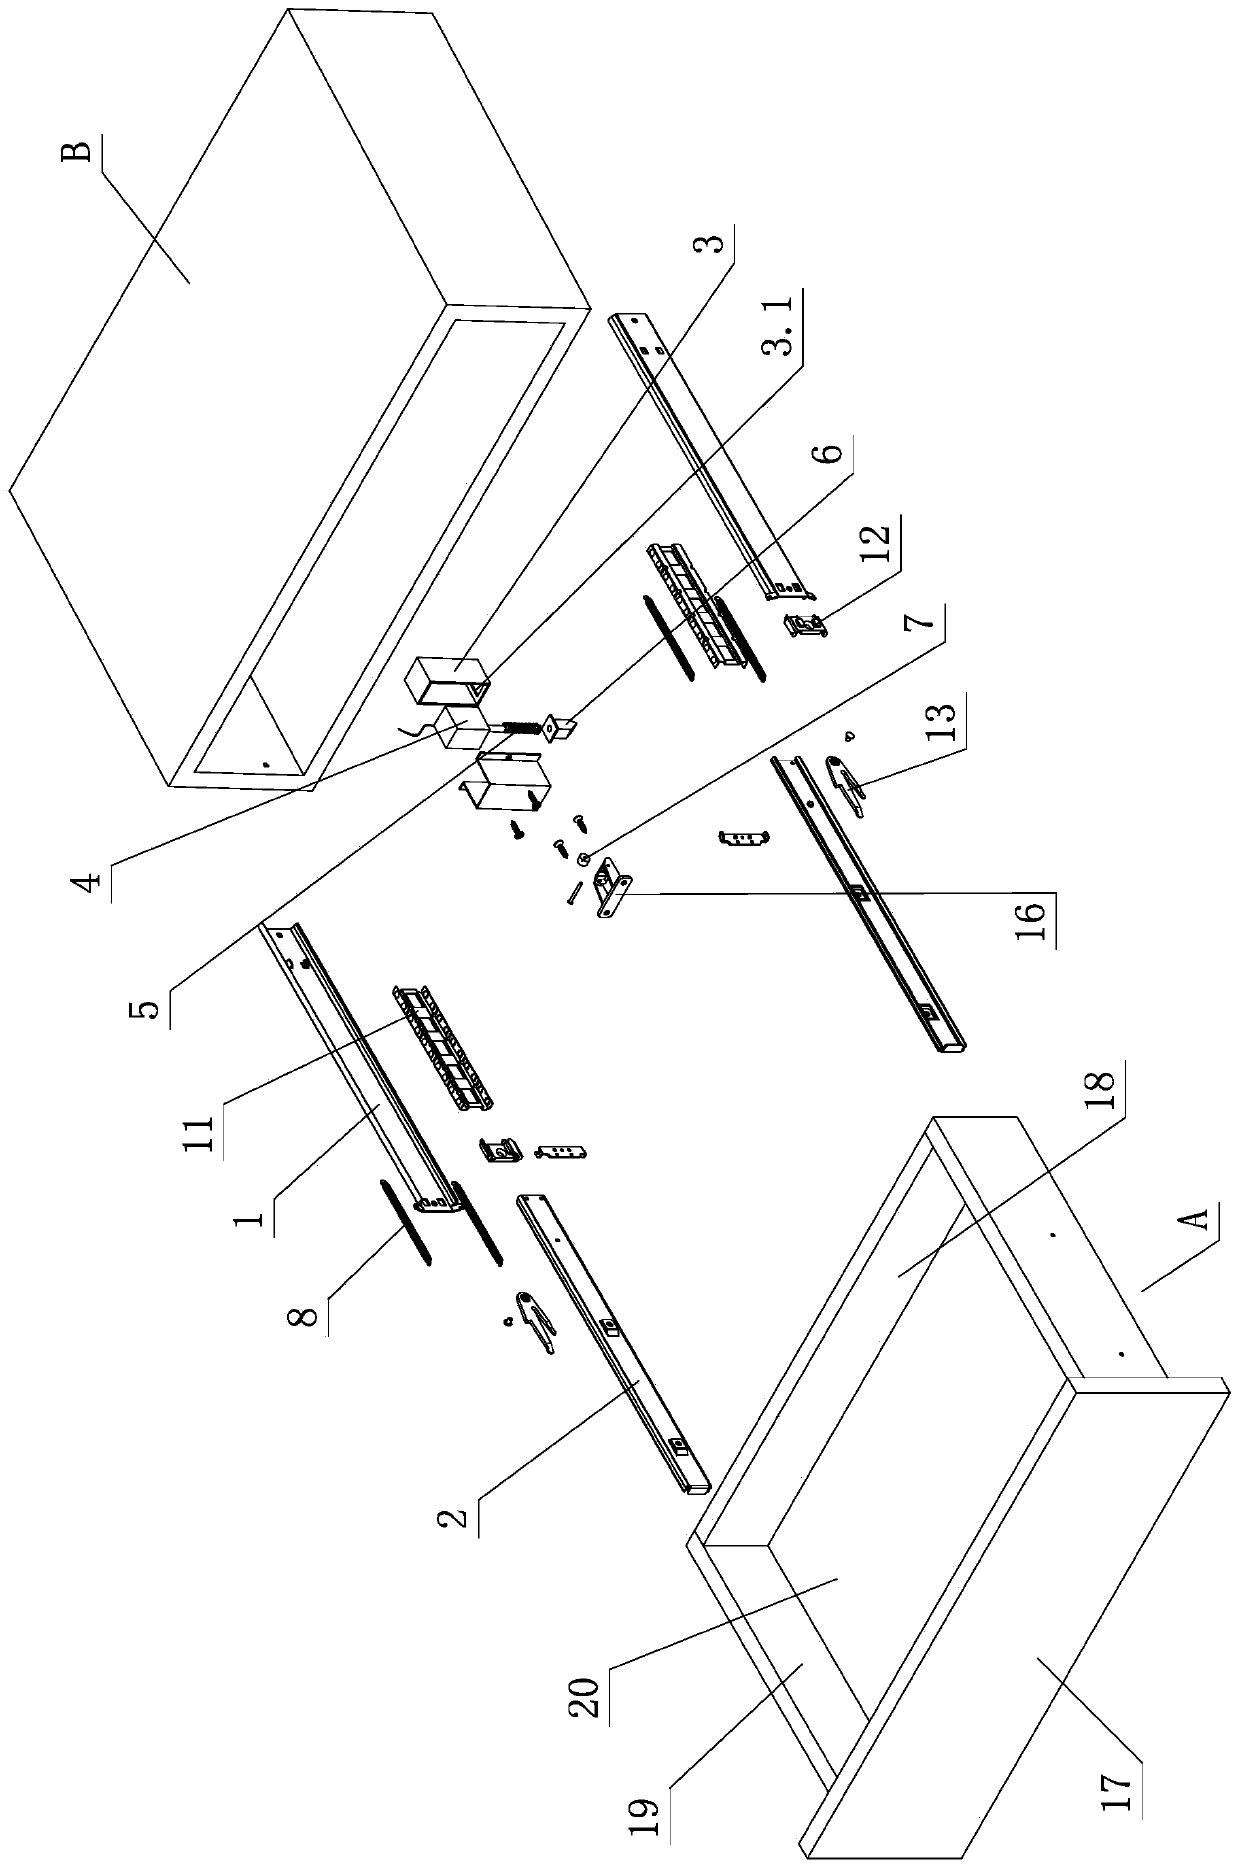 Live rebound structure of drawer slide rail